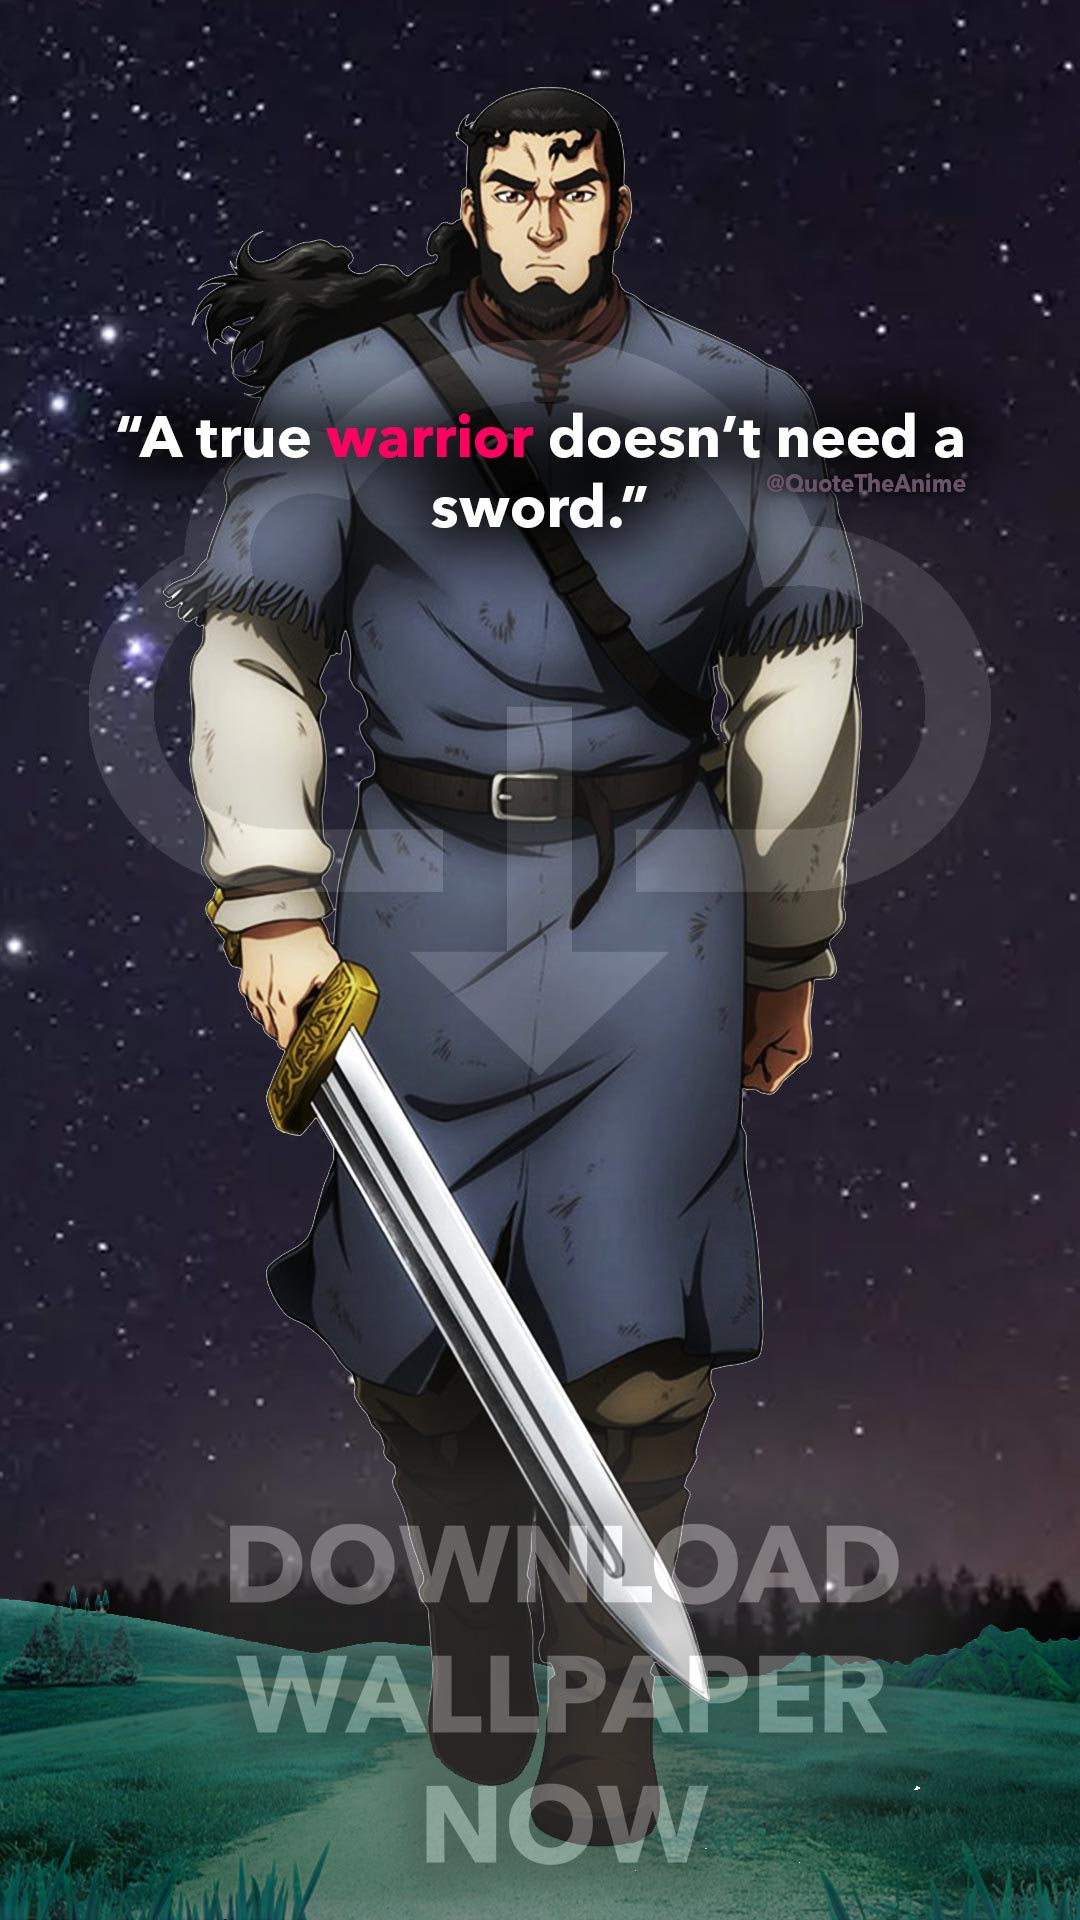 Quote The Anime Vinland Saga Wallpaper Thors A True